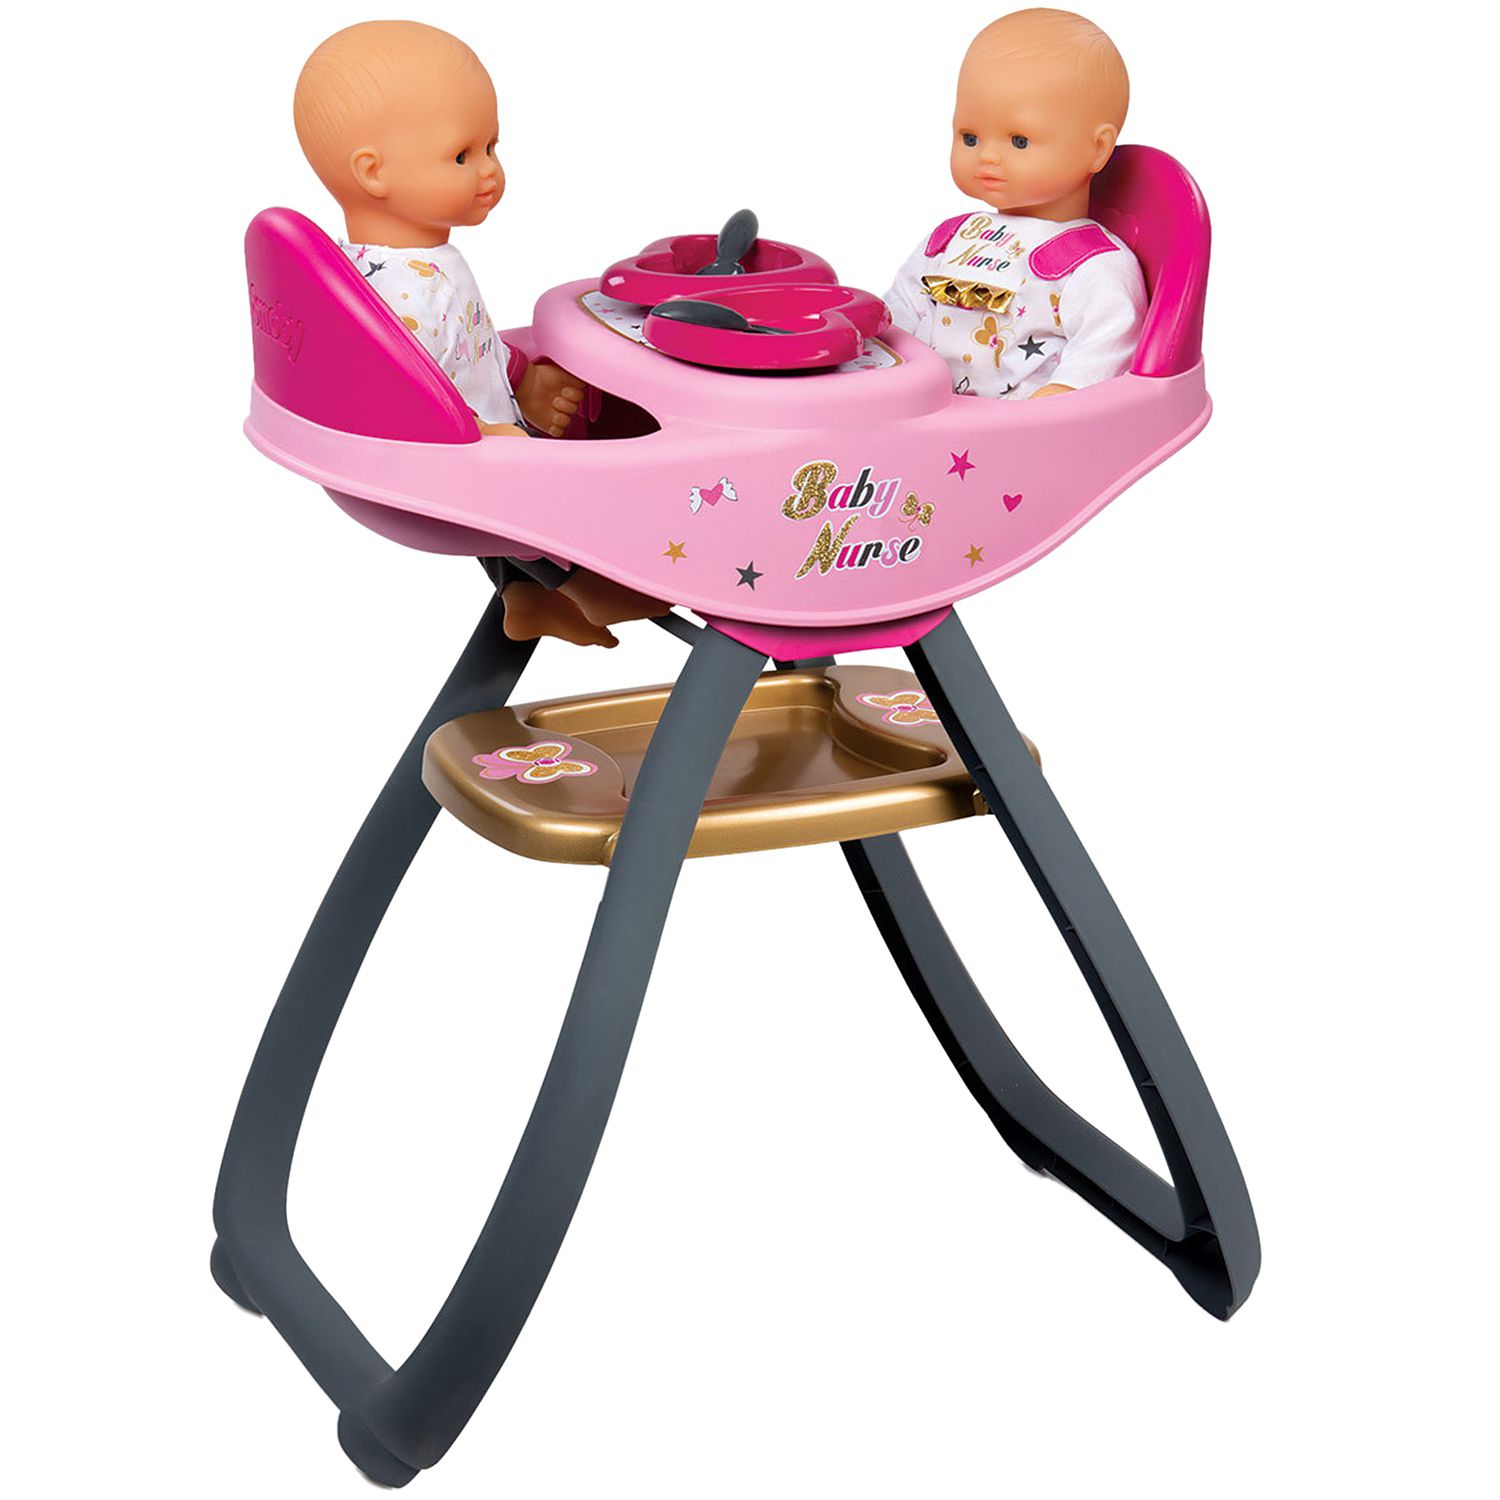 Smoby Baby Nurse стульчик для кормления кукол близняшек